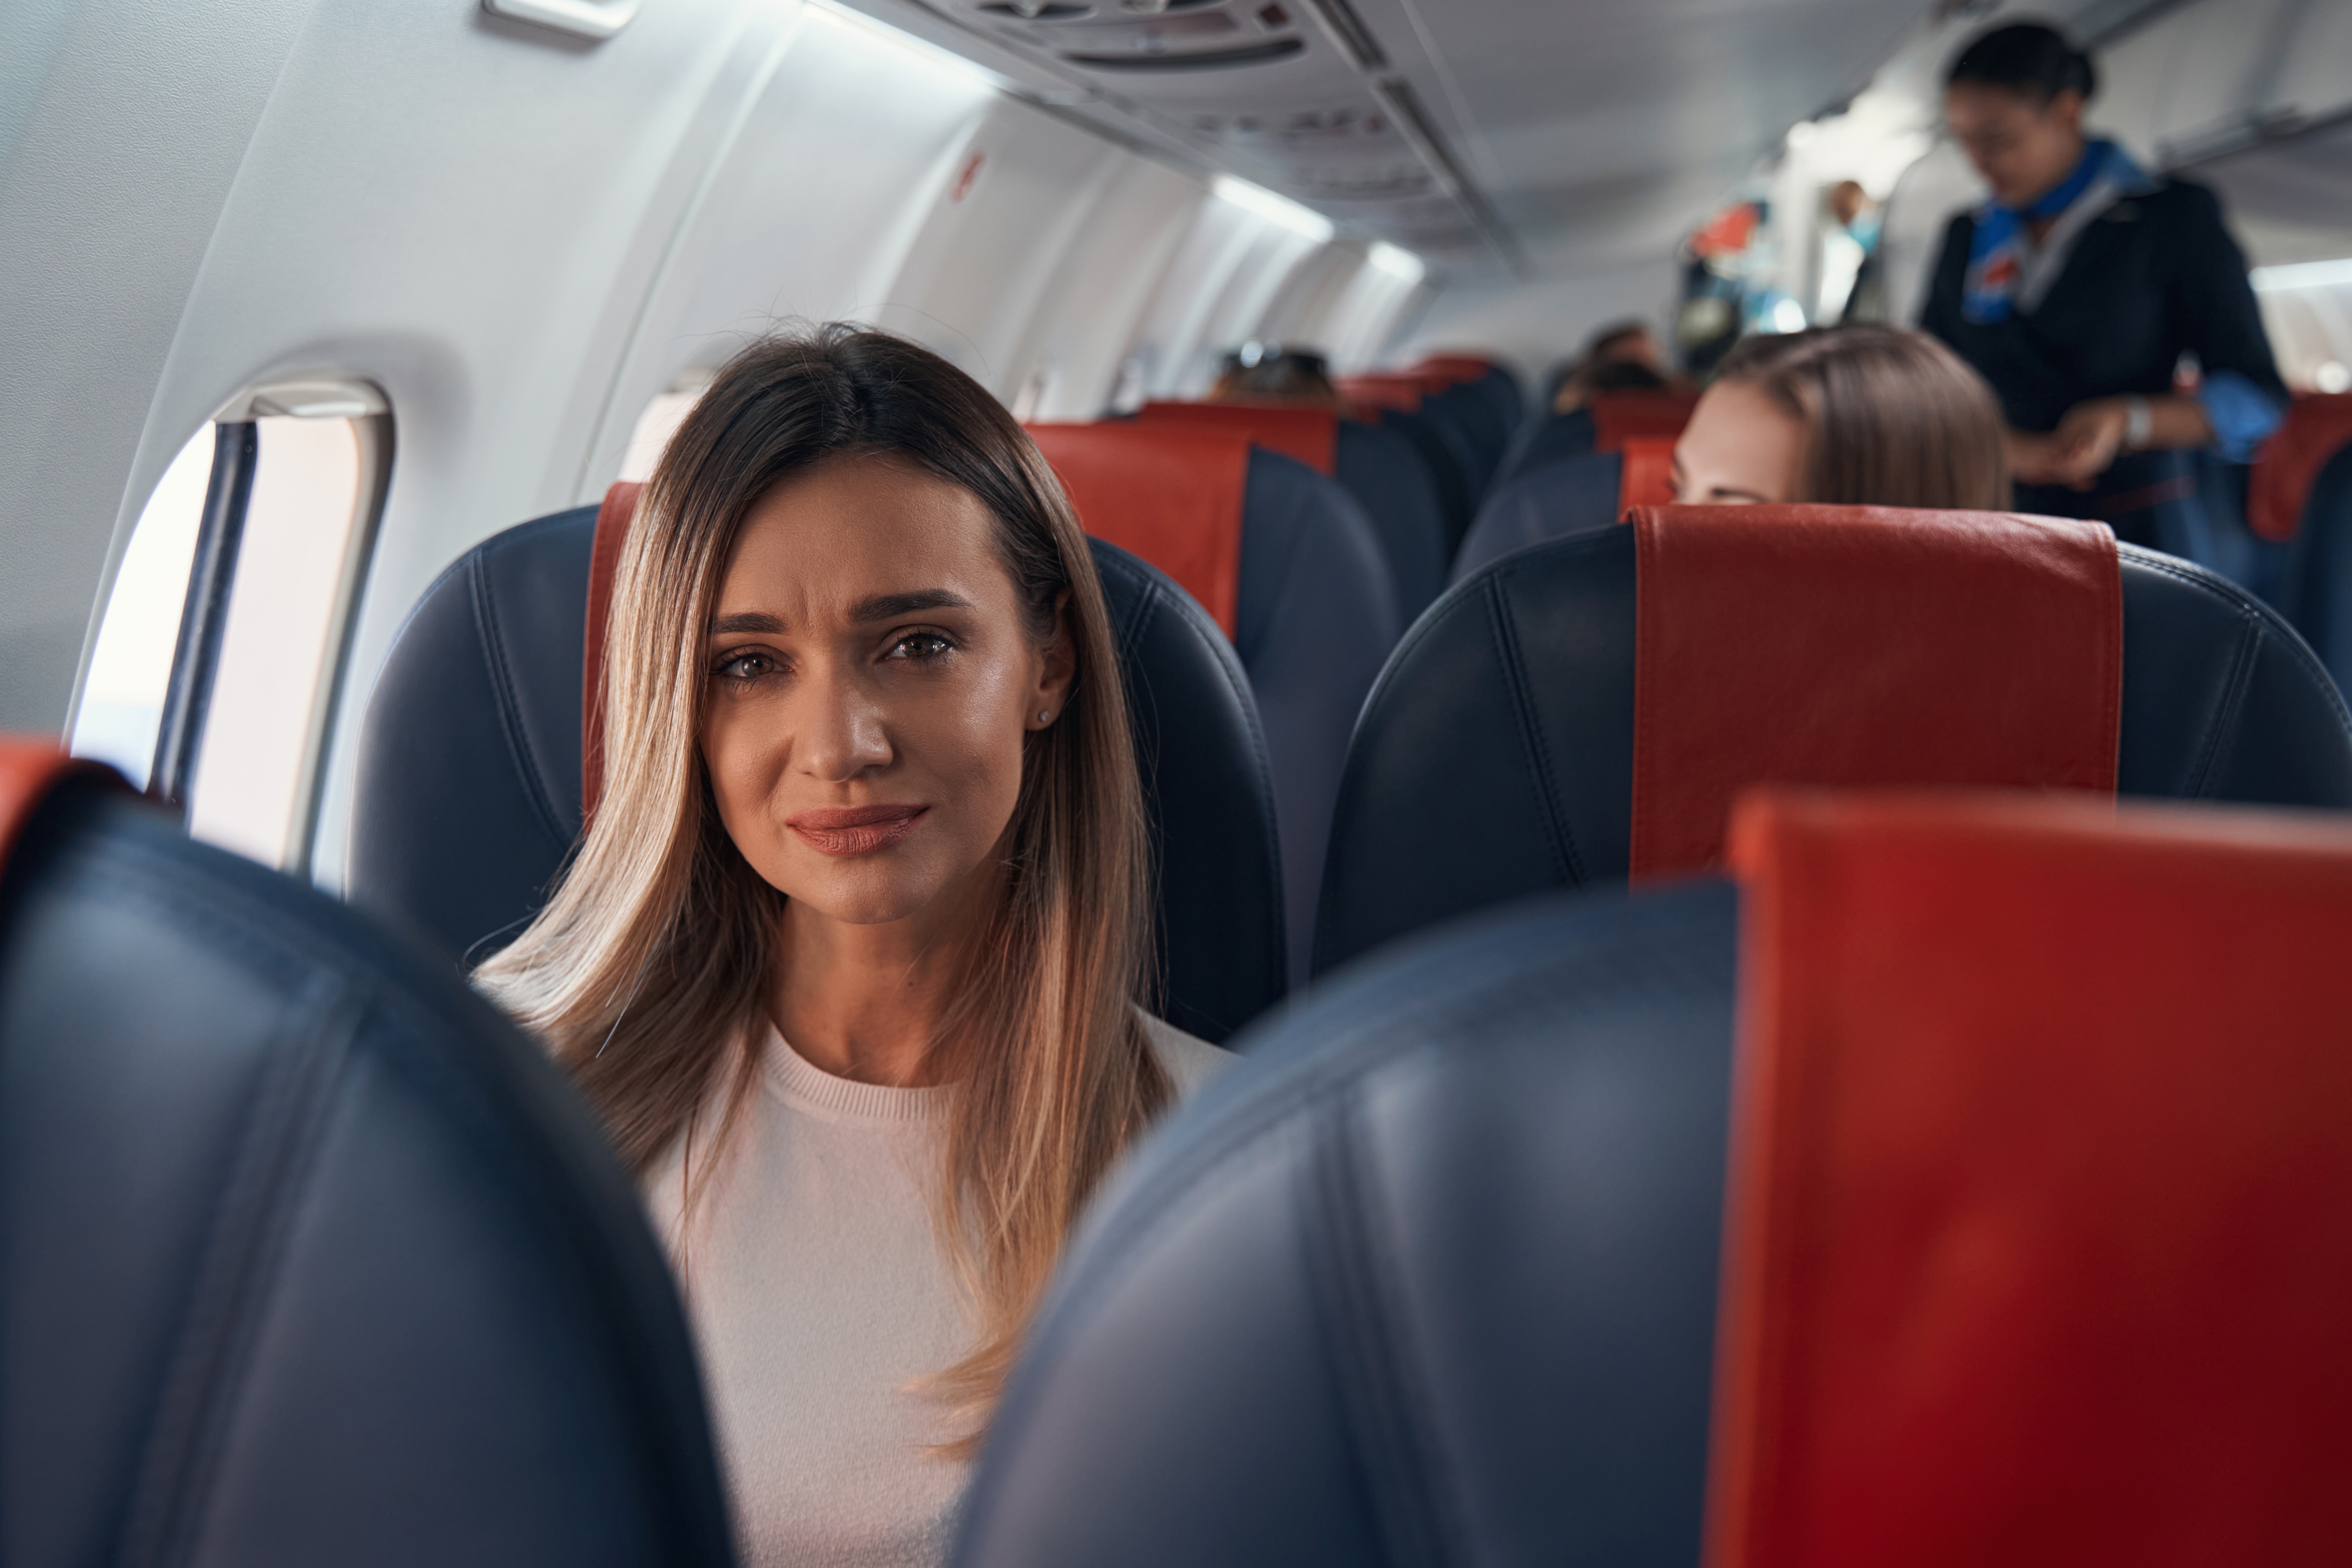 A sad woman on a plane | Source: Shuttterstock